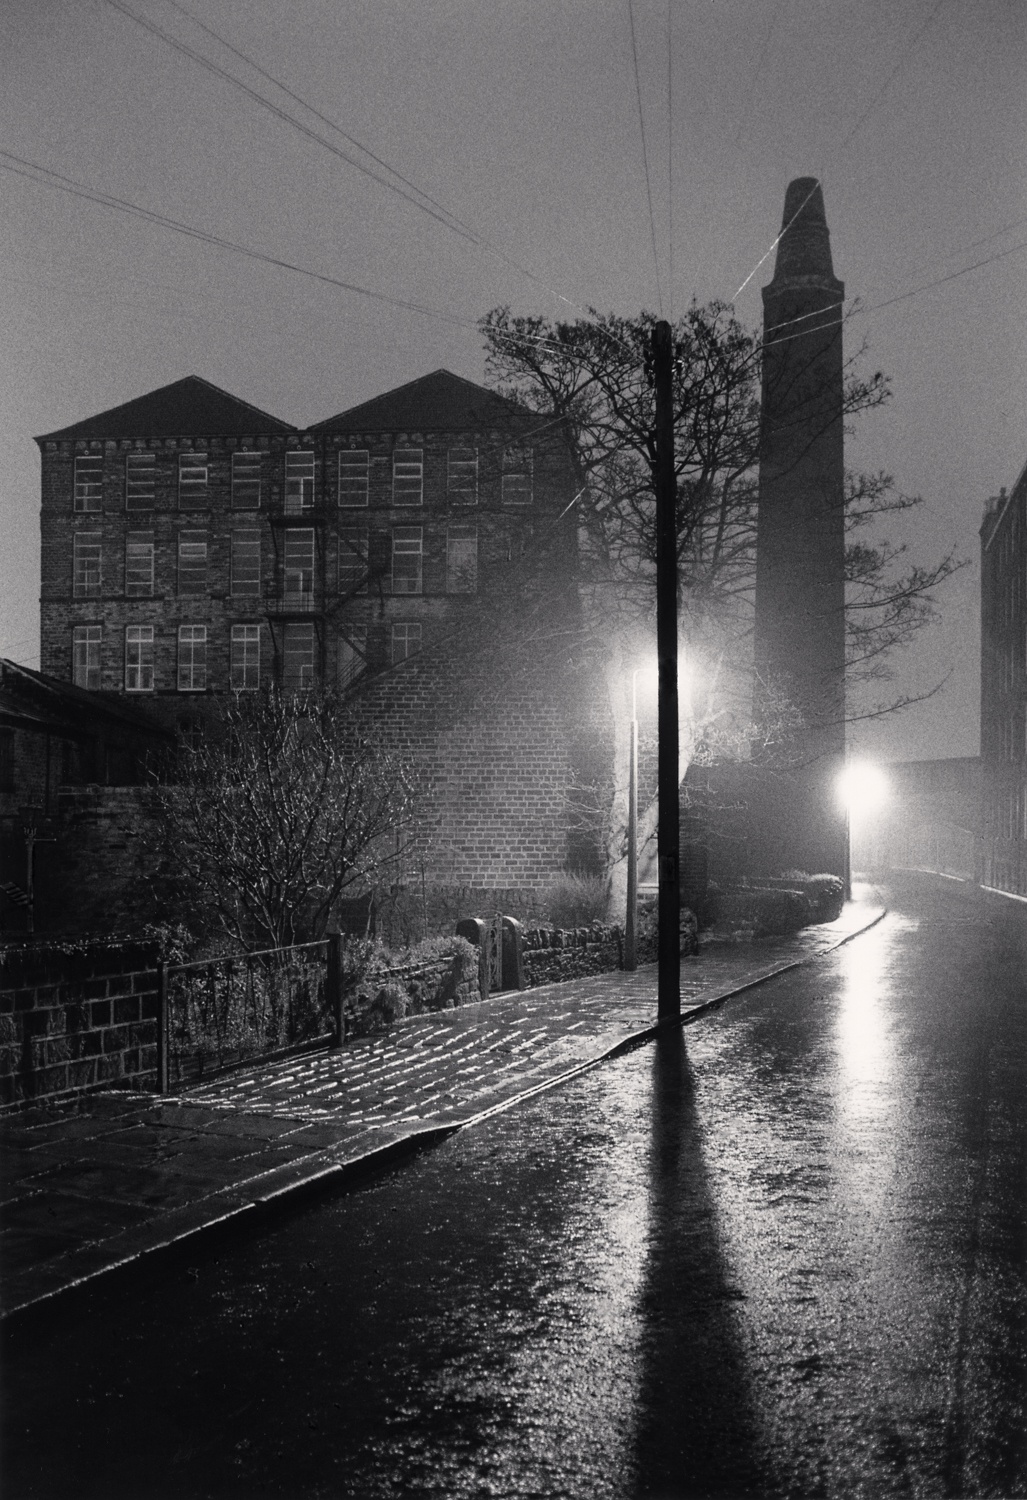 rainy-night-walk-slaithwaite-west-yorkshire-england-1984-by-michael-kenna-silver-gelatin-print-for-sale-at-bosham-gallery